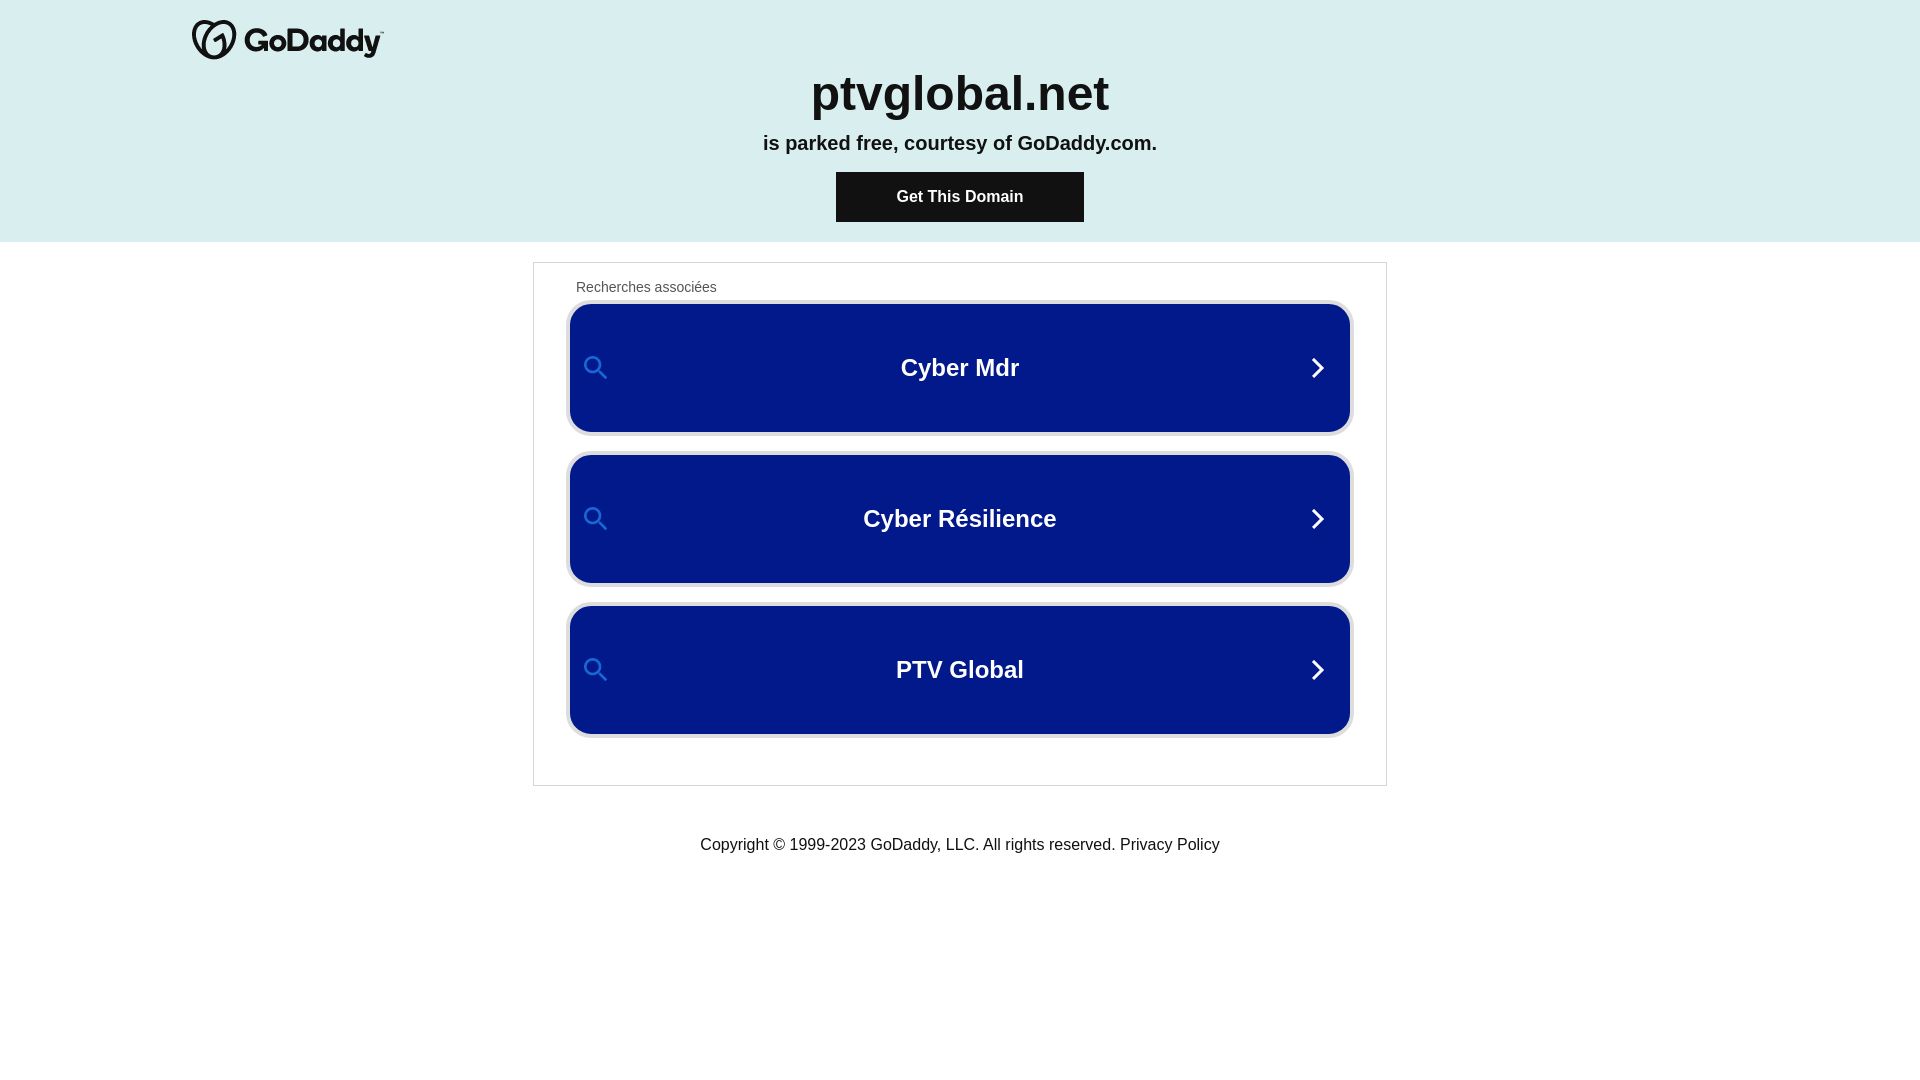 Website status ptvglobal.net is   ONLINE